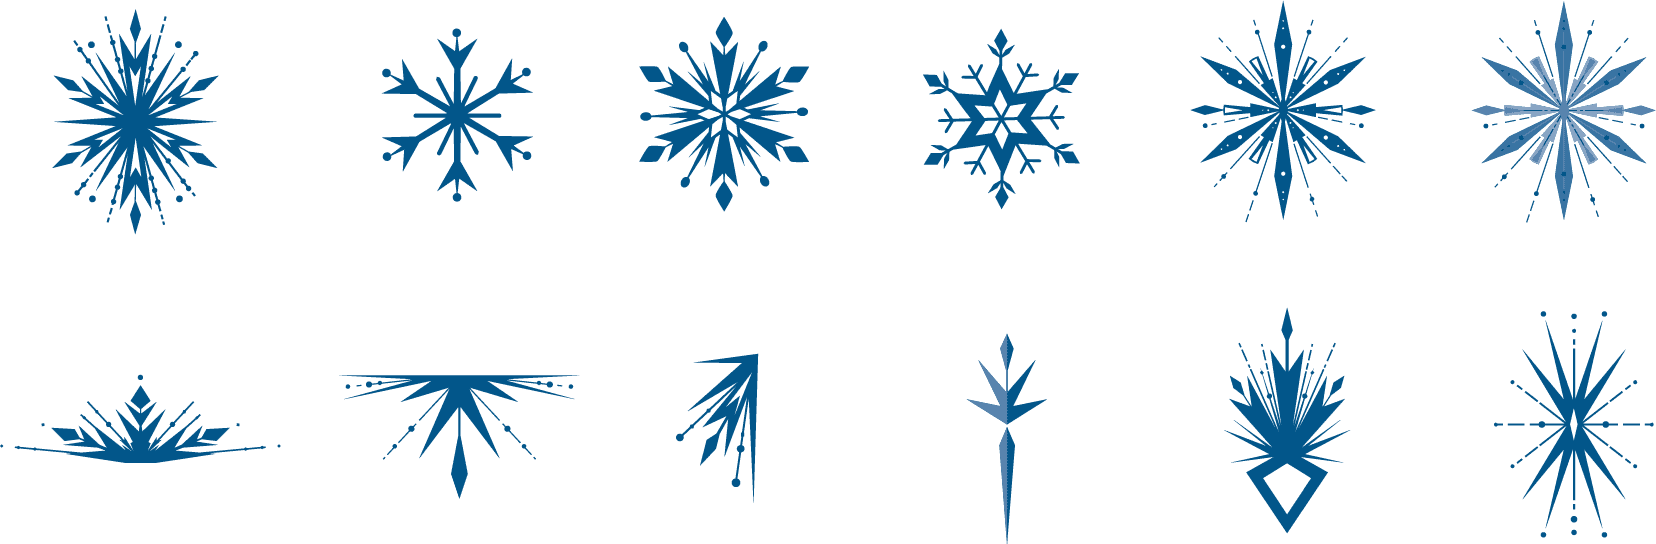 Frozen snowflake designs